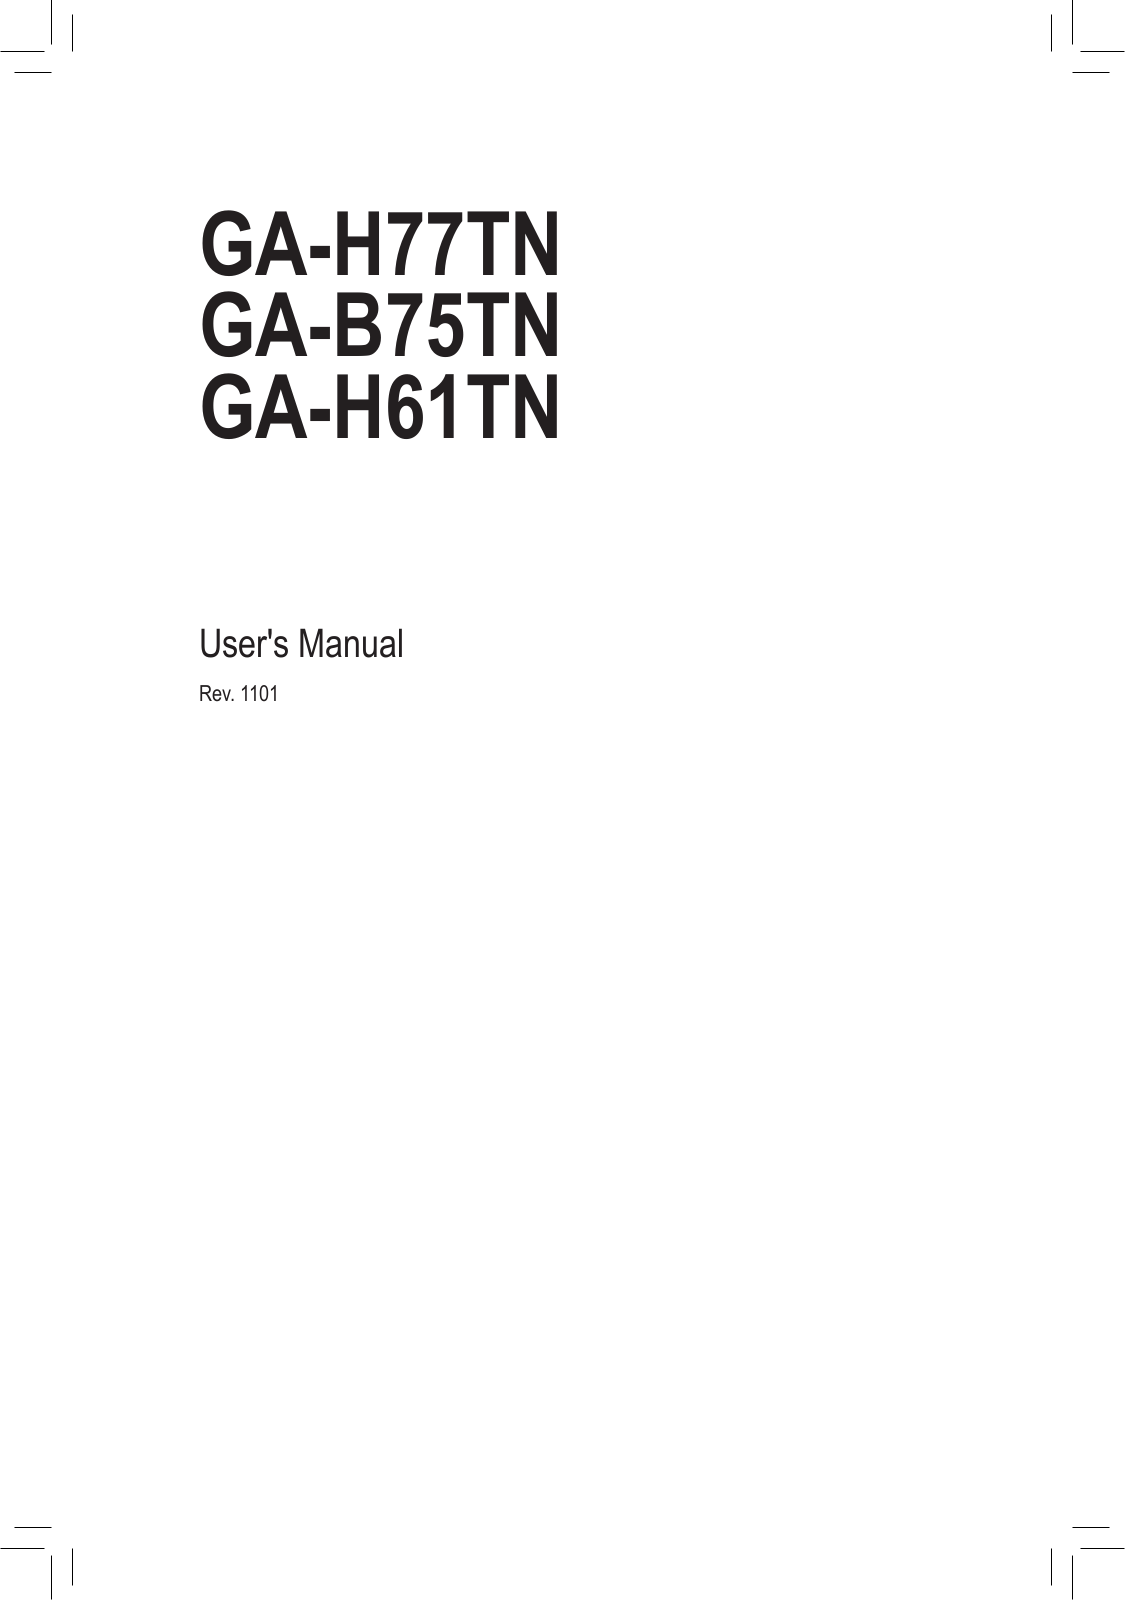 GIGABYTE GA-H77TN, GA-B75TN Owner's Manual